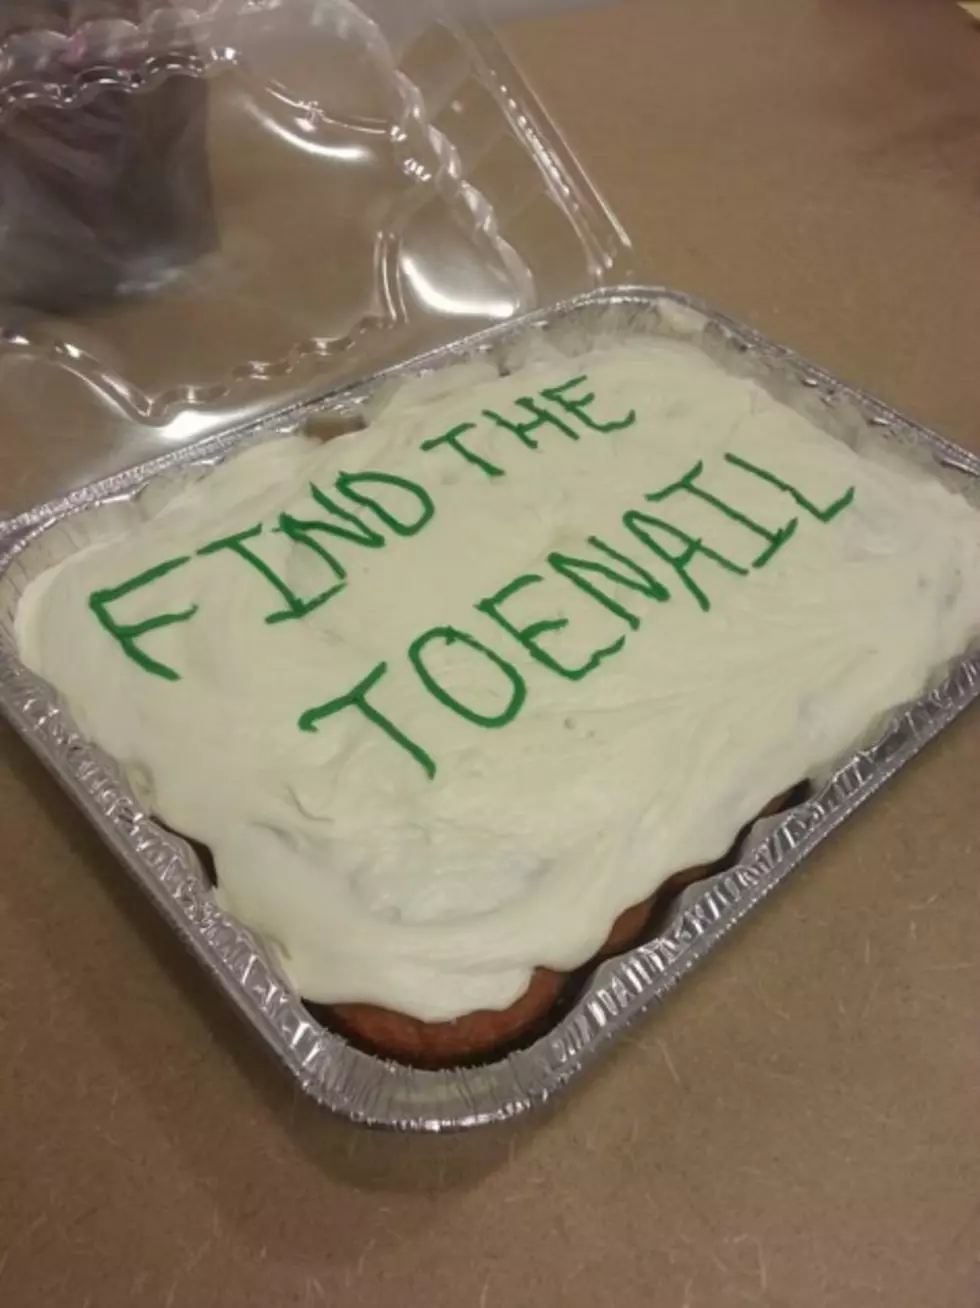 Should Tanya Serve This Cake at Work?